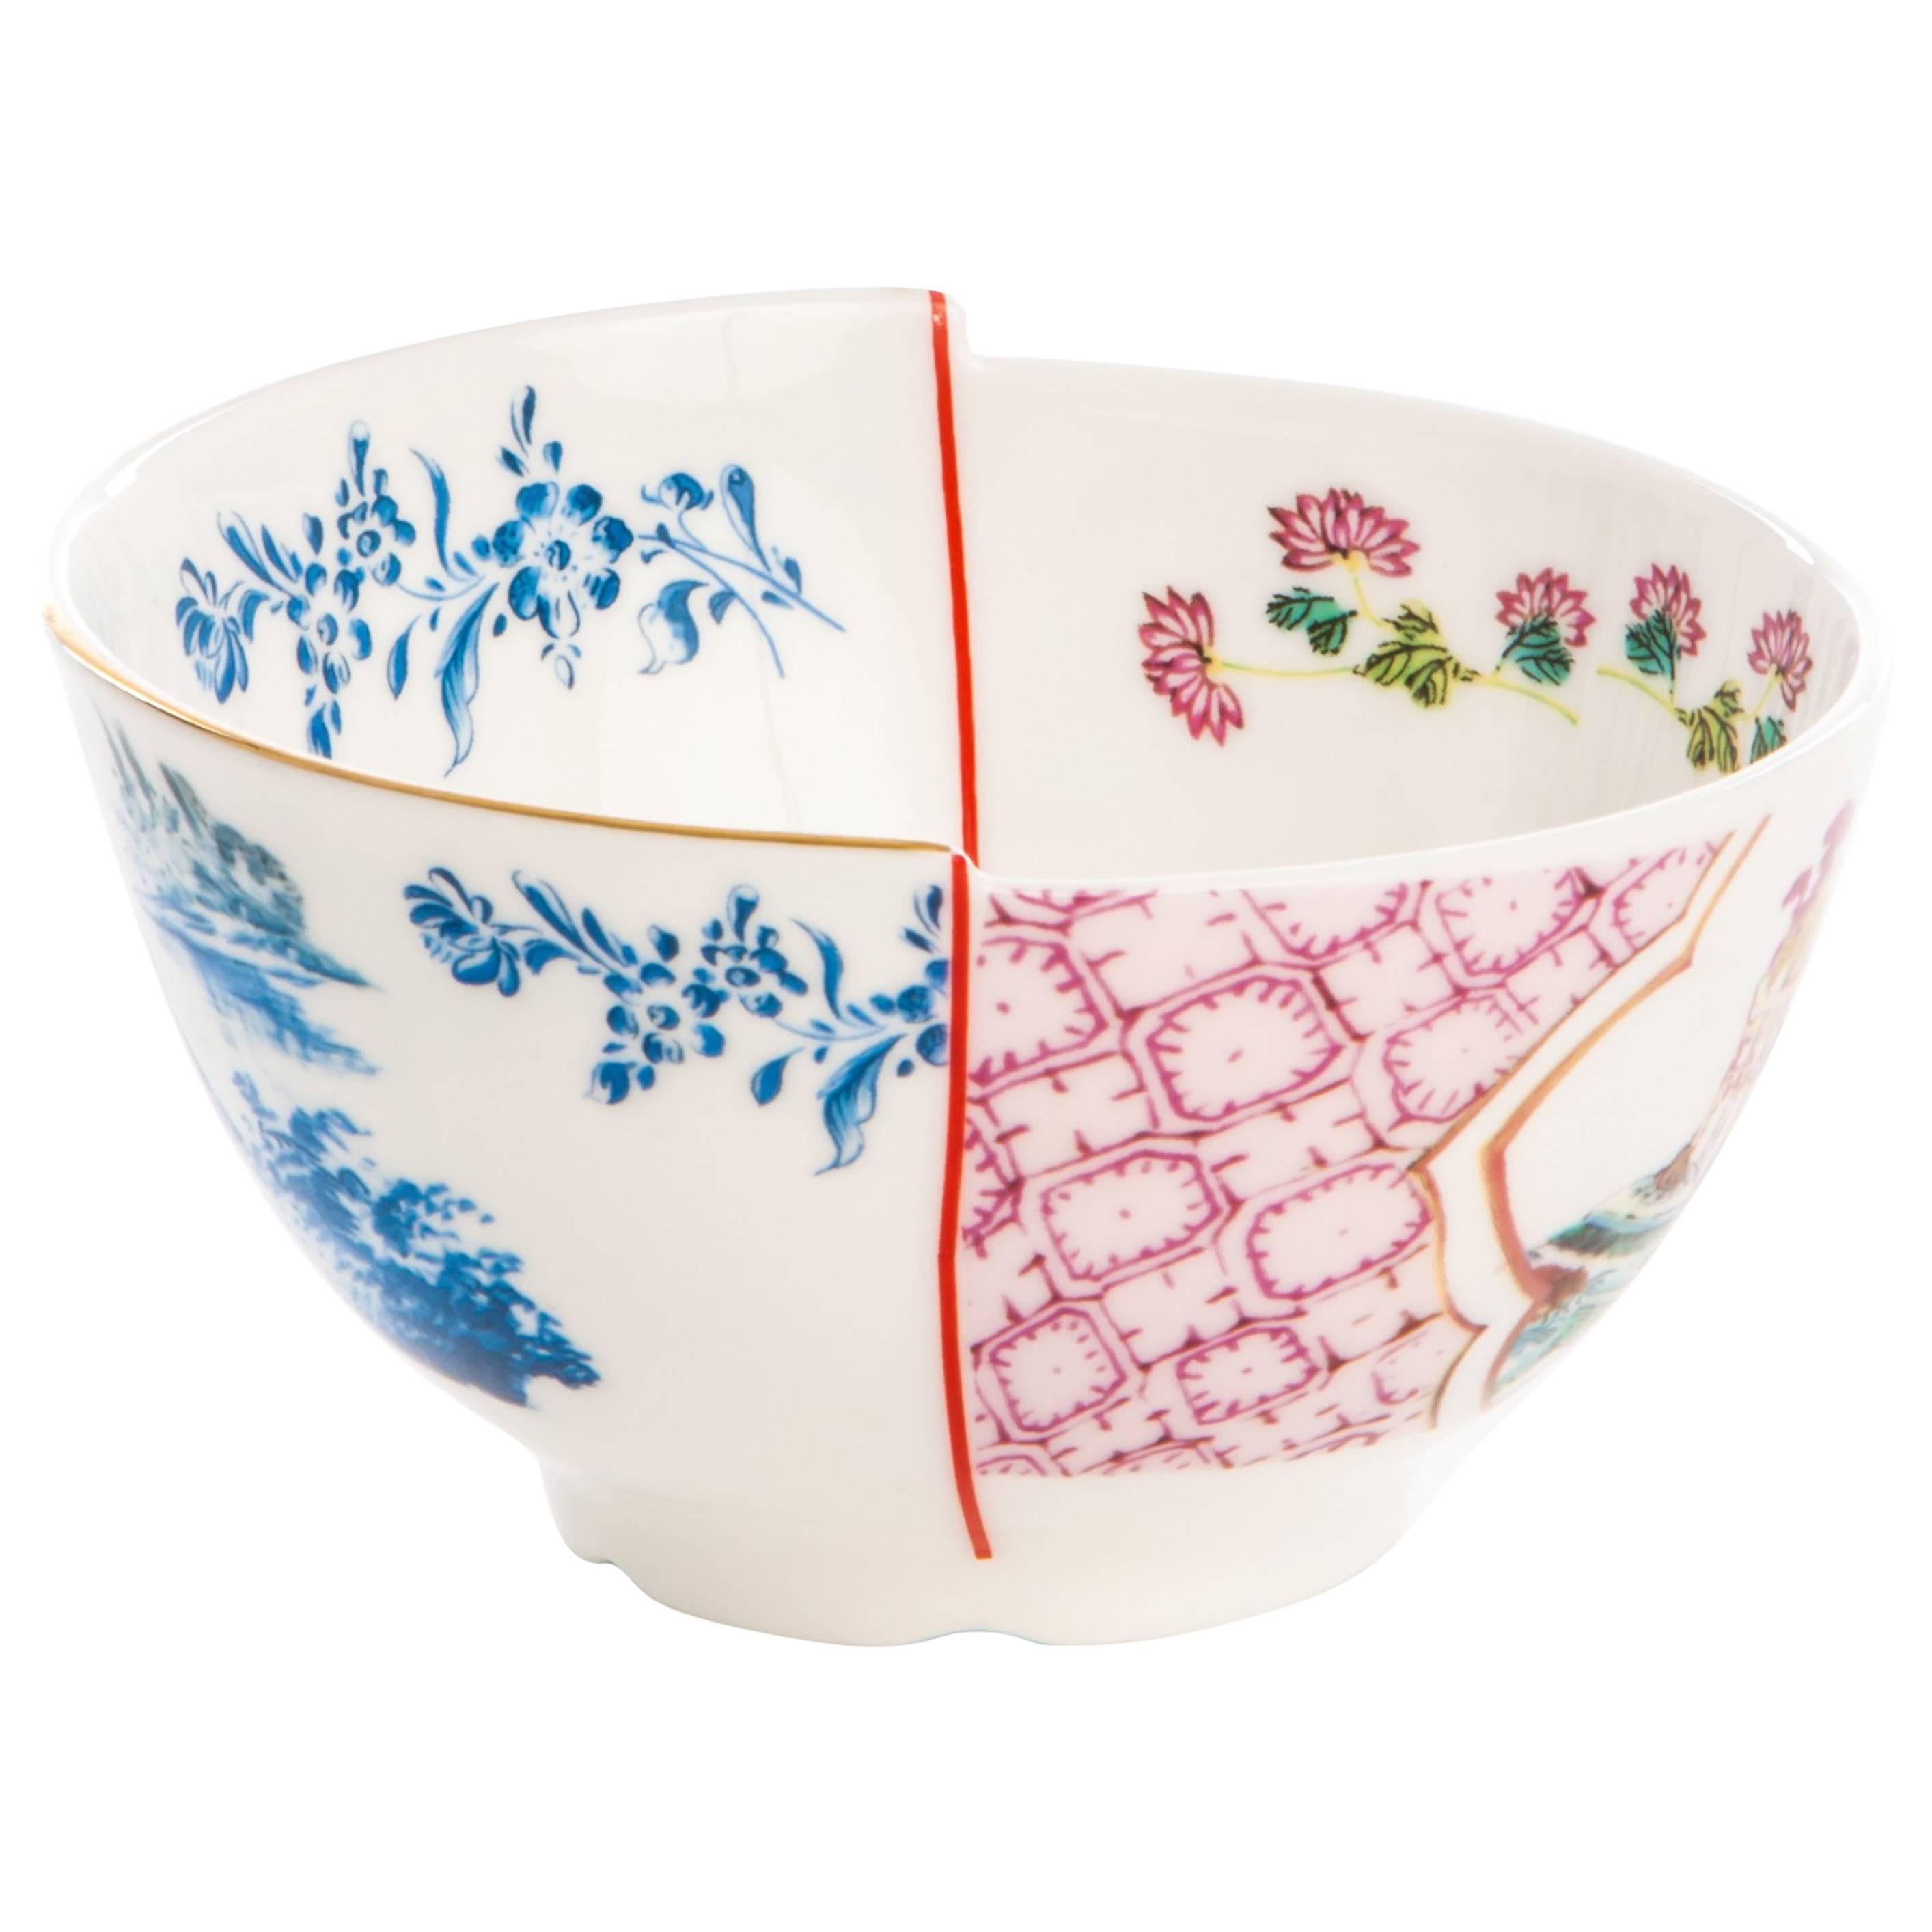 Seletti "Hybrid-Cloe" Porcelain Fruit Bowls